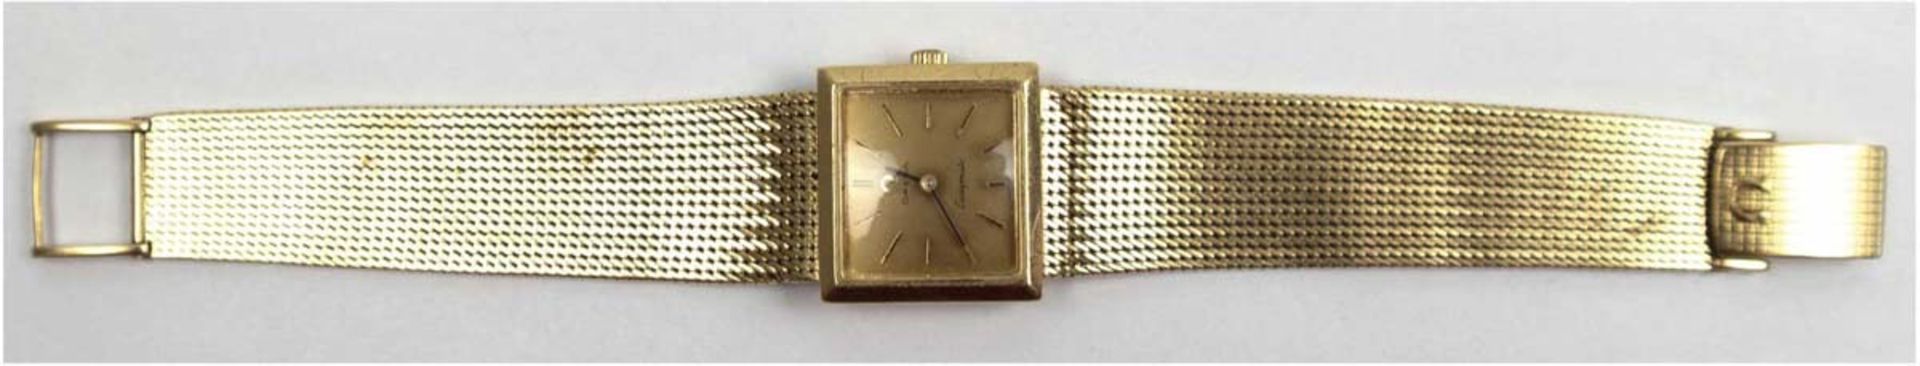 Damen-Armbanduhr "Omega Ladymade", 18 kt GG, Handaufzug, rechteckiges Uhrengehäuse 2,0x2,2cm mit